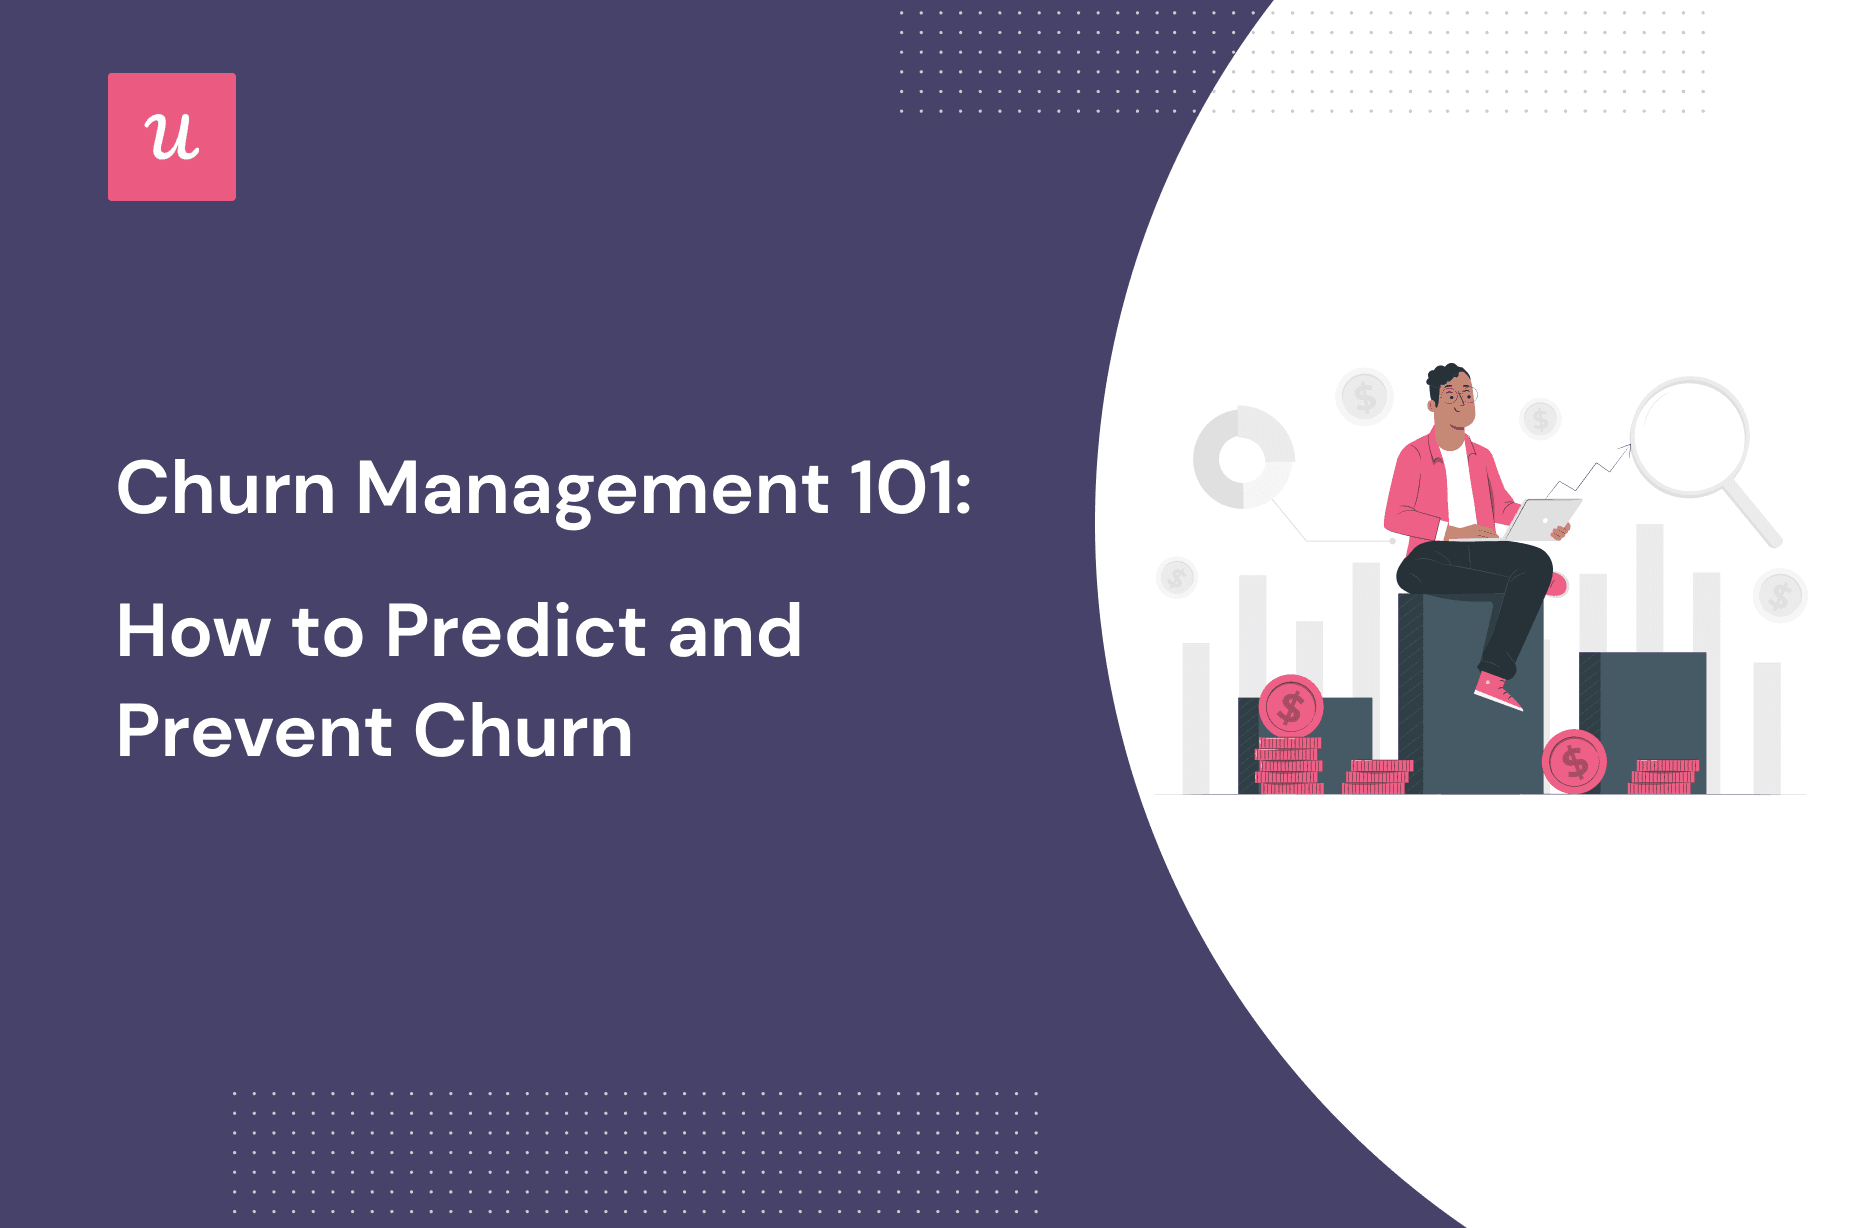 Churn Management Basics: How to Predict and Prevent Churn